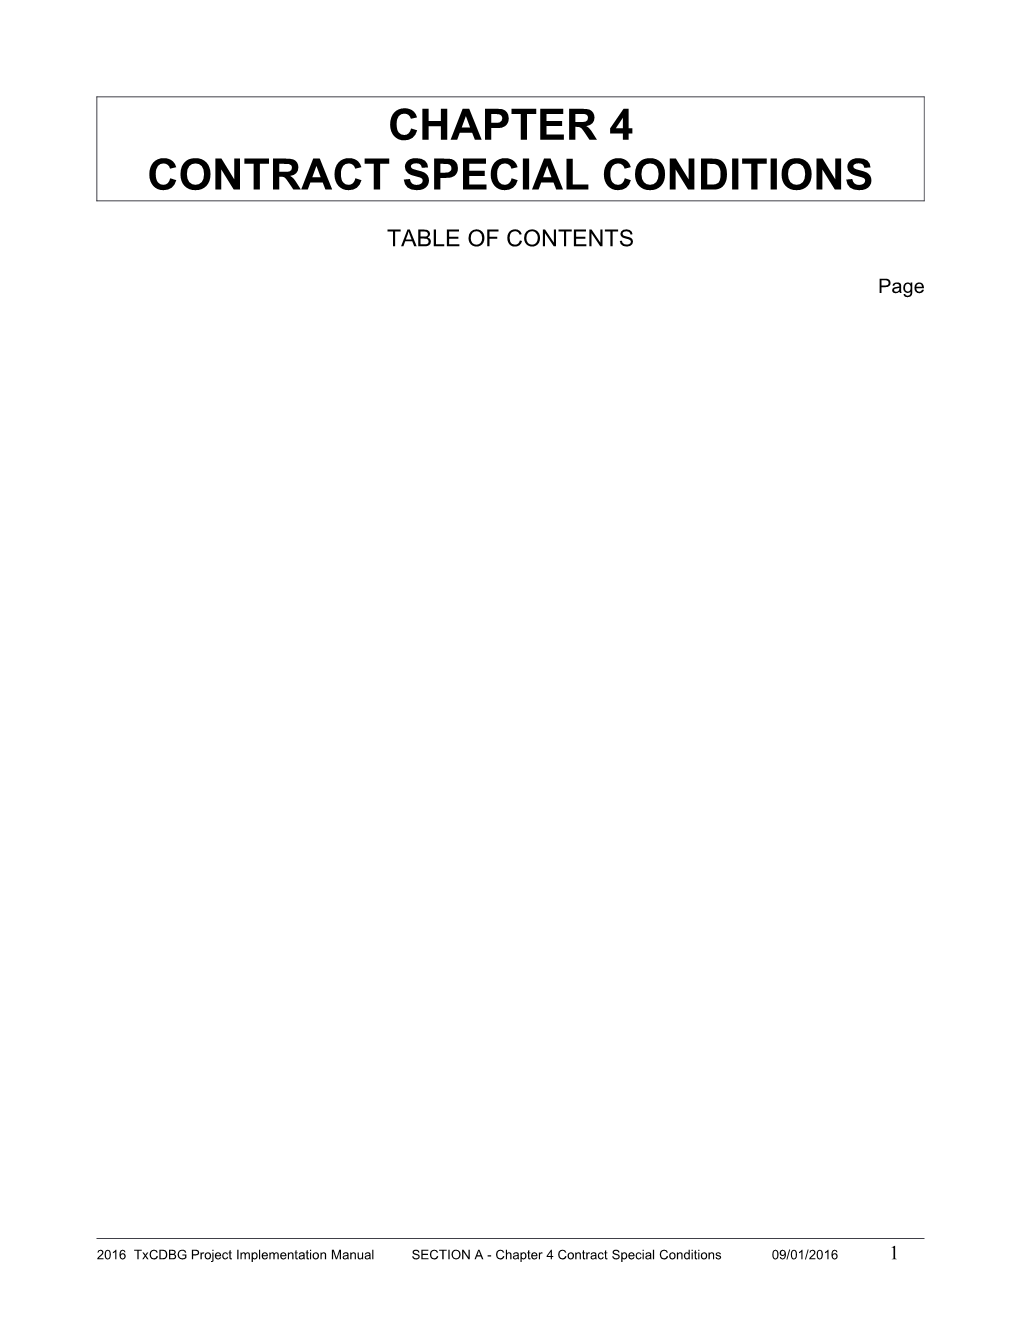 4.1 Special Conditions - Pre Construction